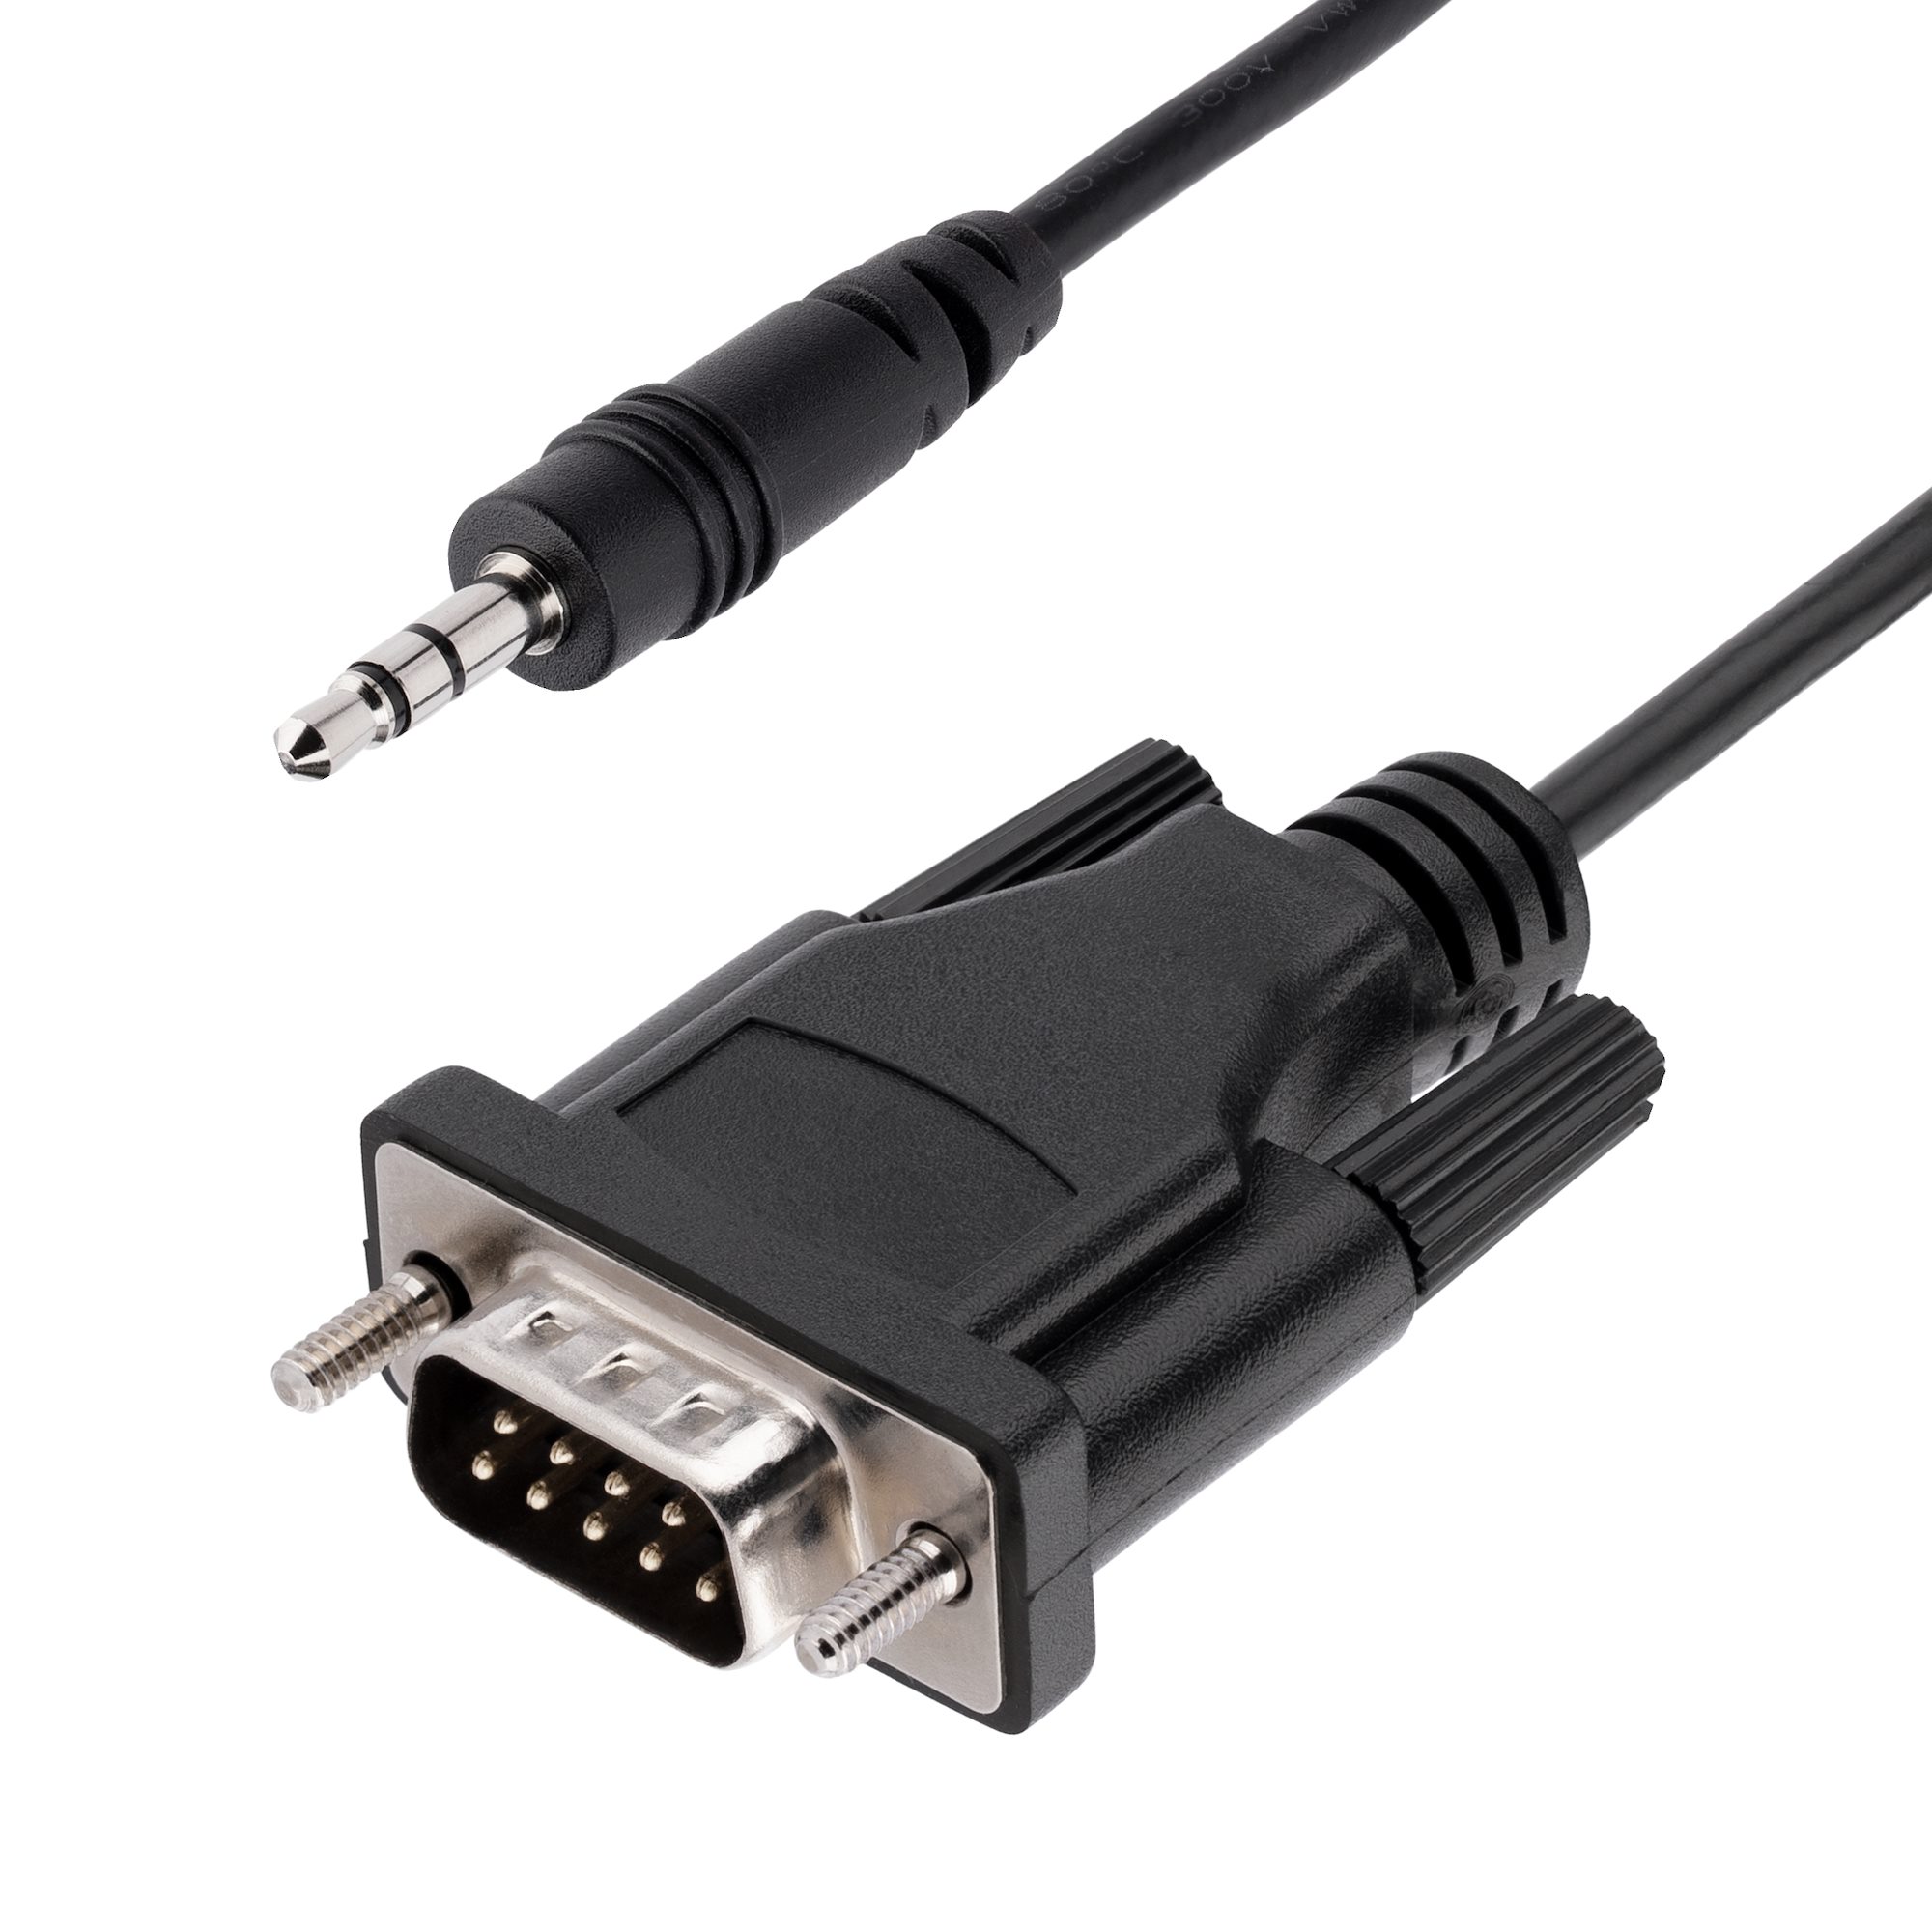 StarTech.com Câble adaptateur USB vers série DB9 RS232